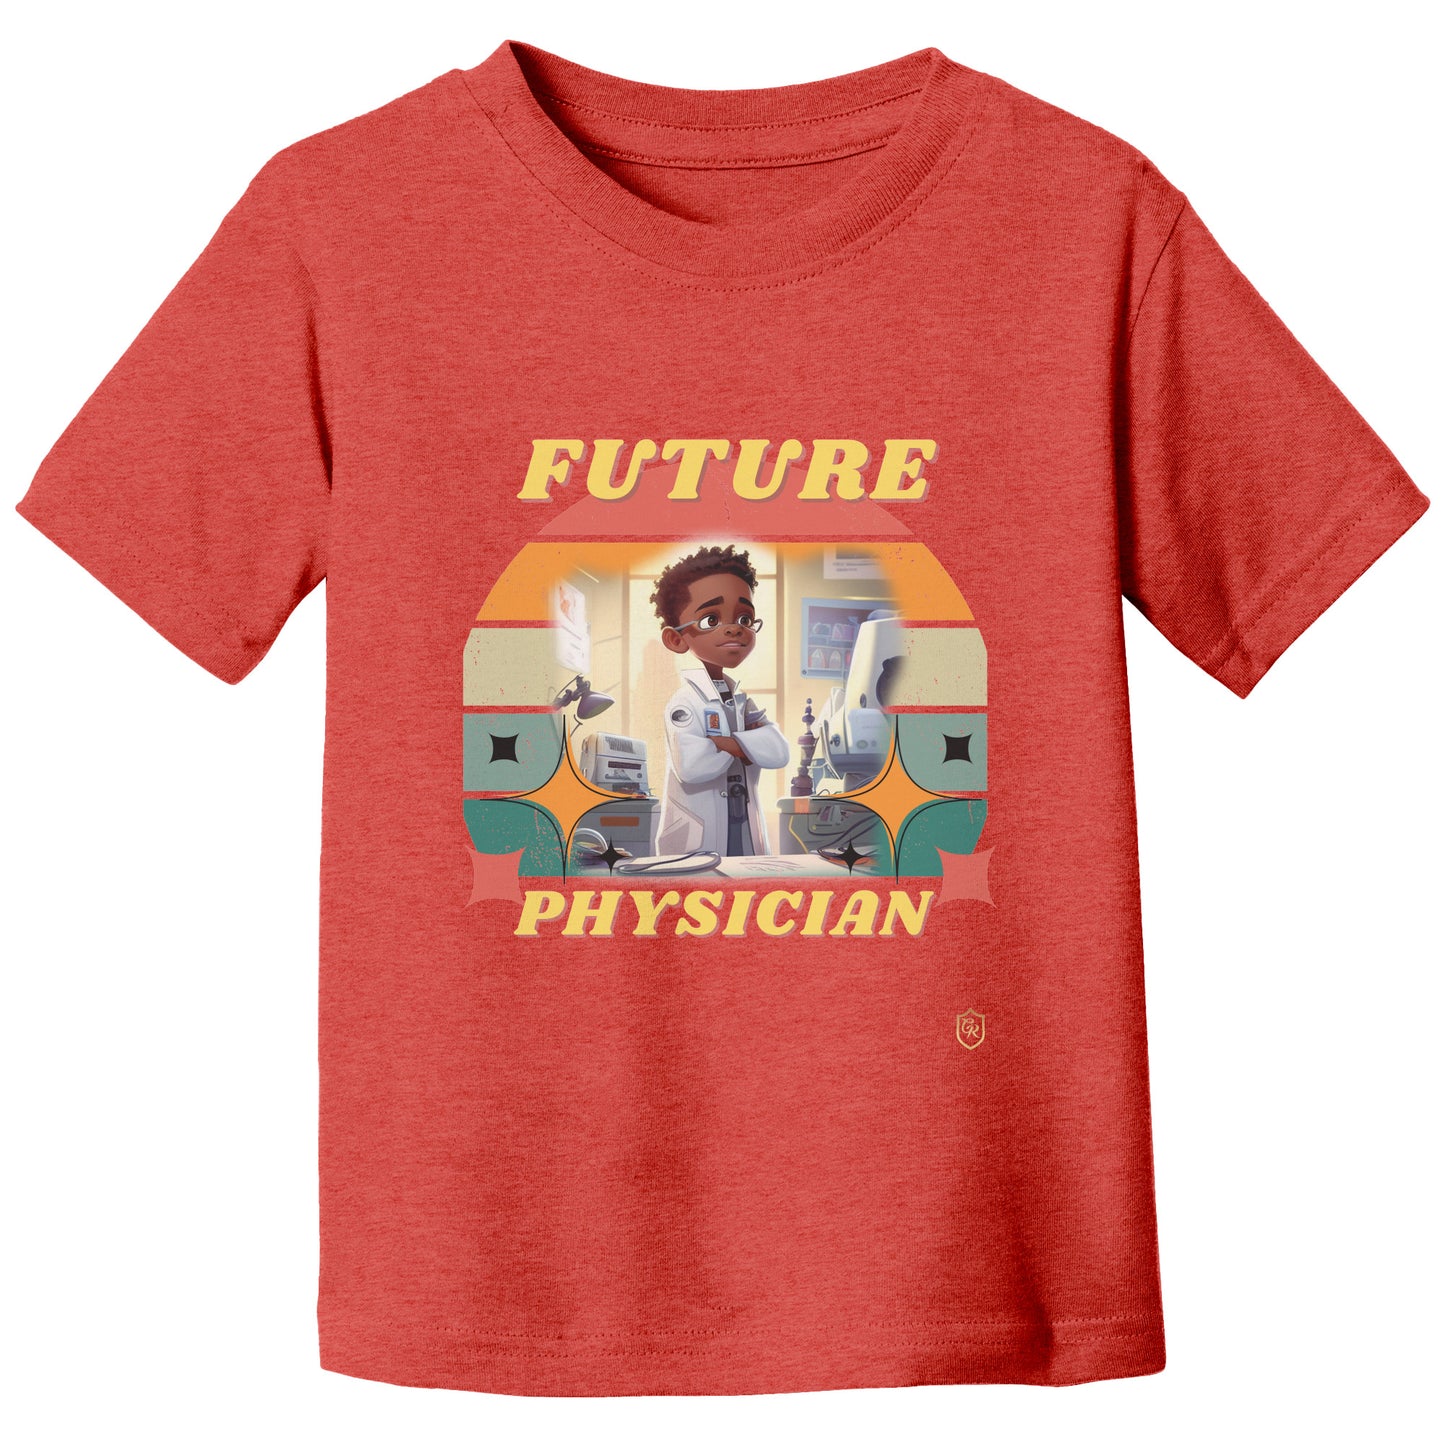 Boy's Future Physician T-shirt